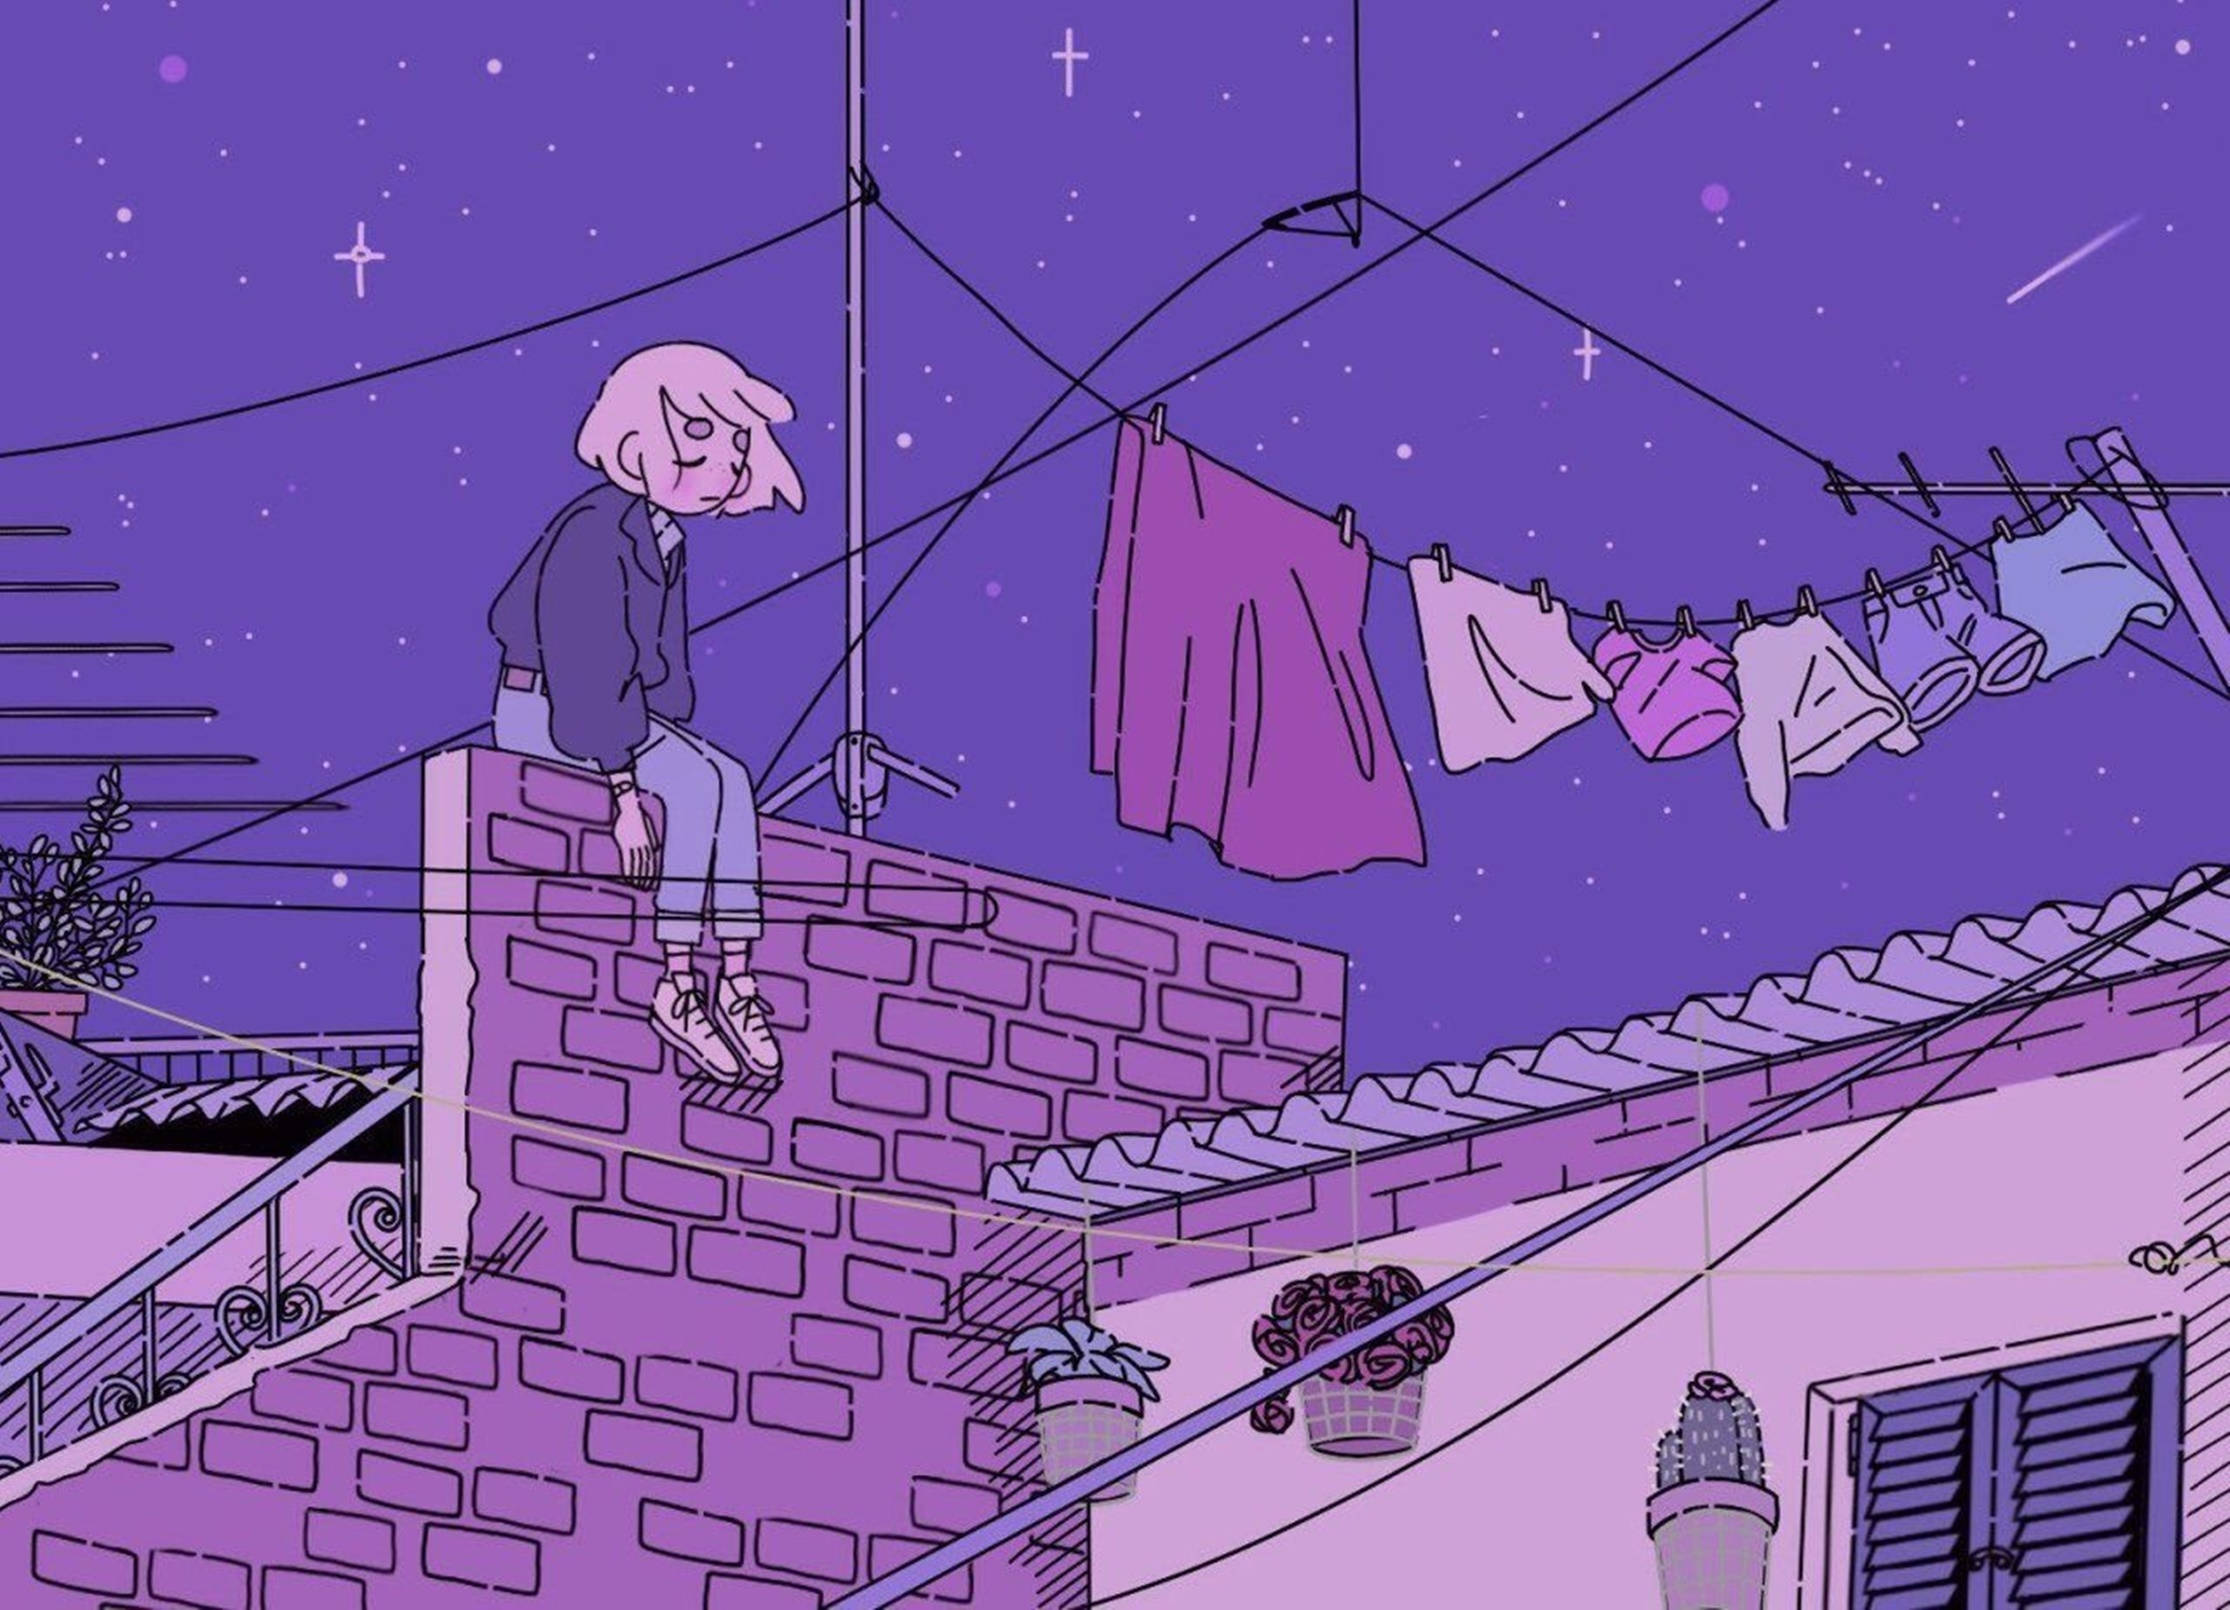 Lo Fi Anime Girl Over Purple Sky Background